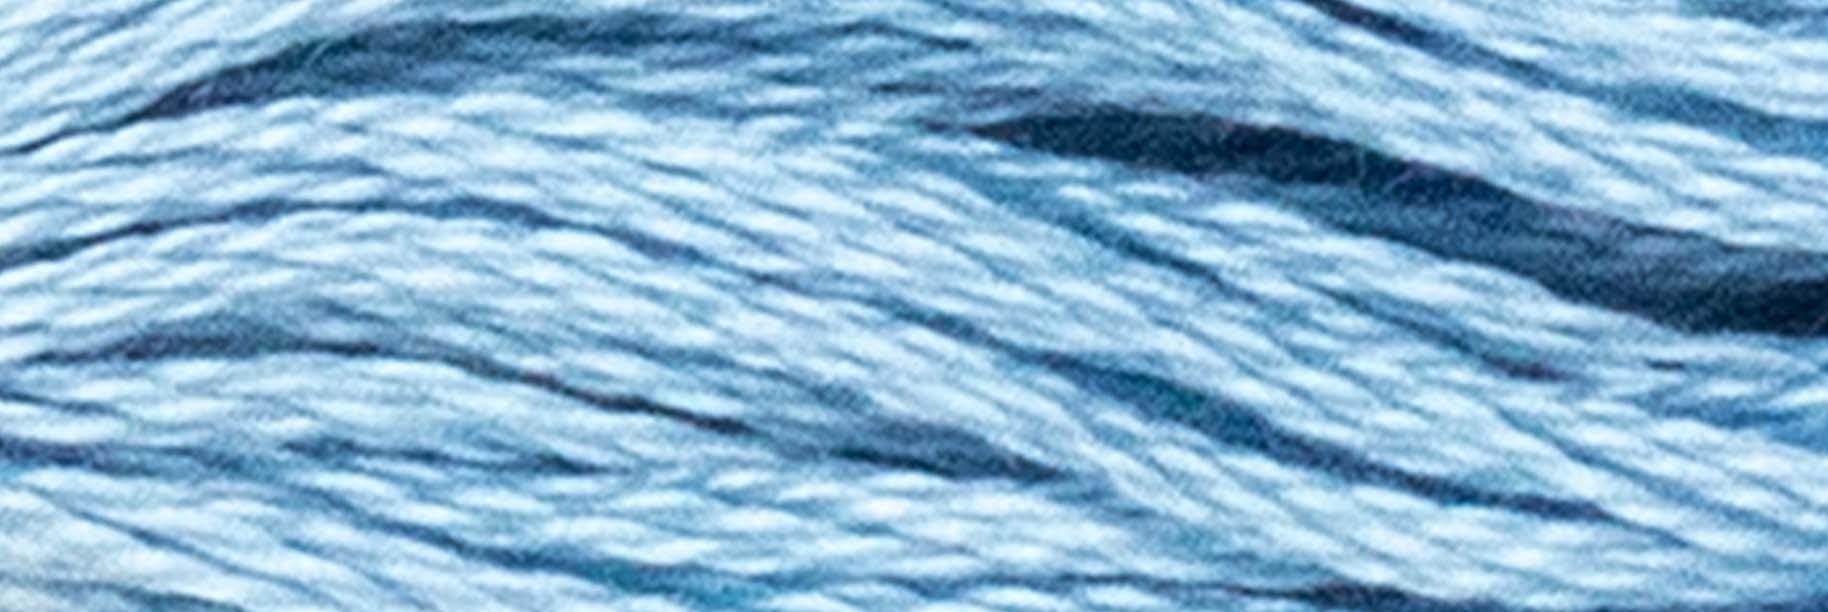 Stranded Cotton Luca-S - 198 / DMC 519 / Anchor 160 - Luca-S Stranded Cotton